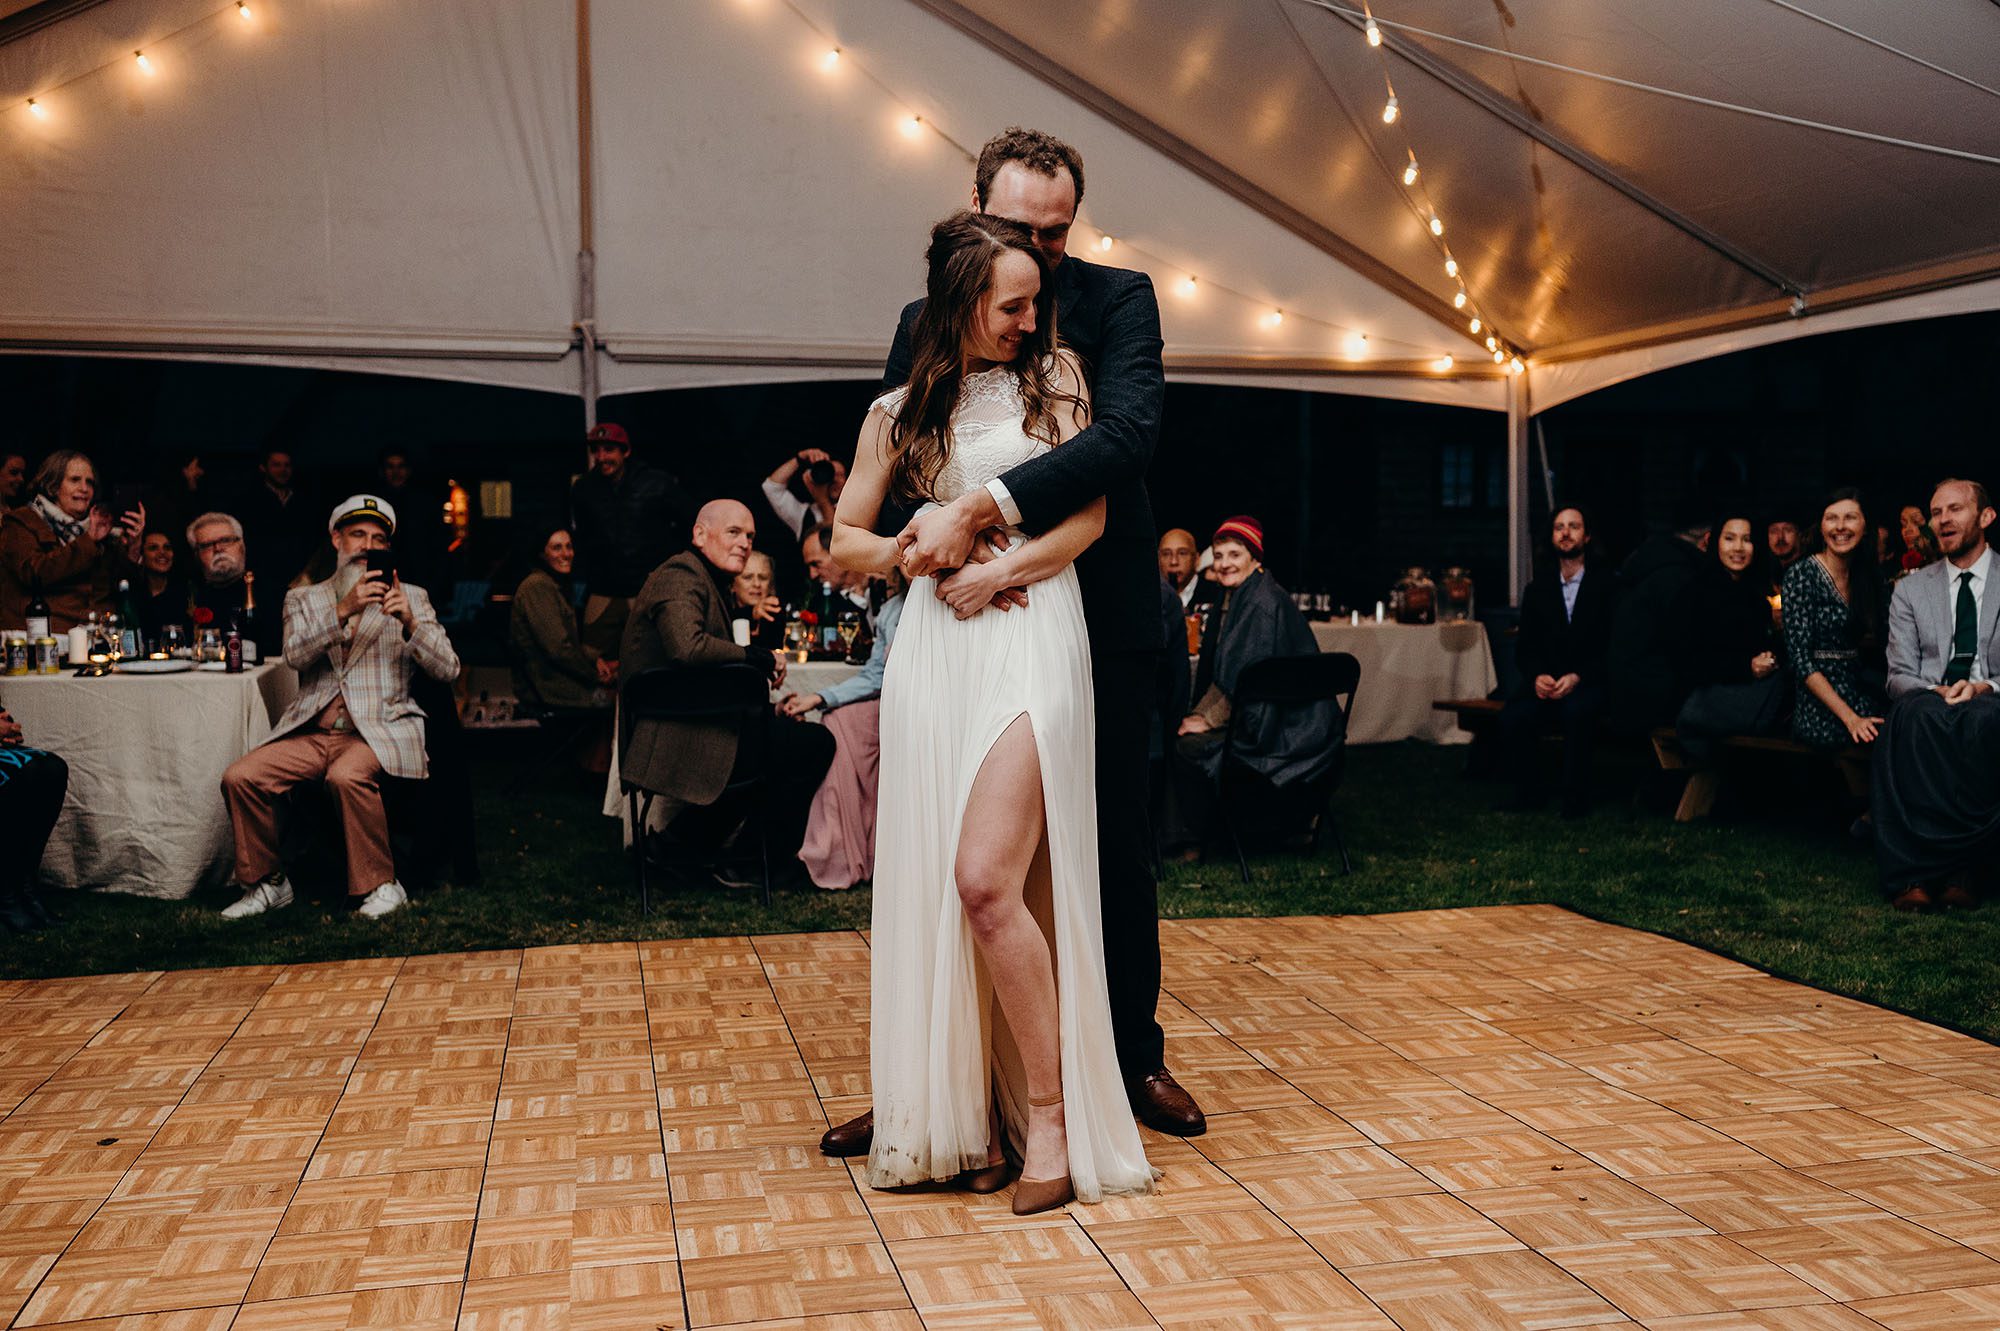 Long Beach Peninsula Wedding Bride & Groom Dancing During Reception by Briana Morrison Photography